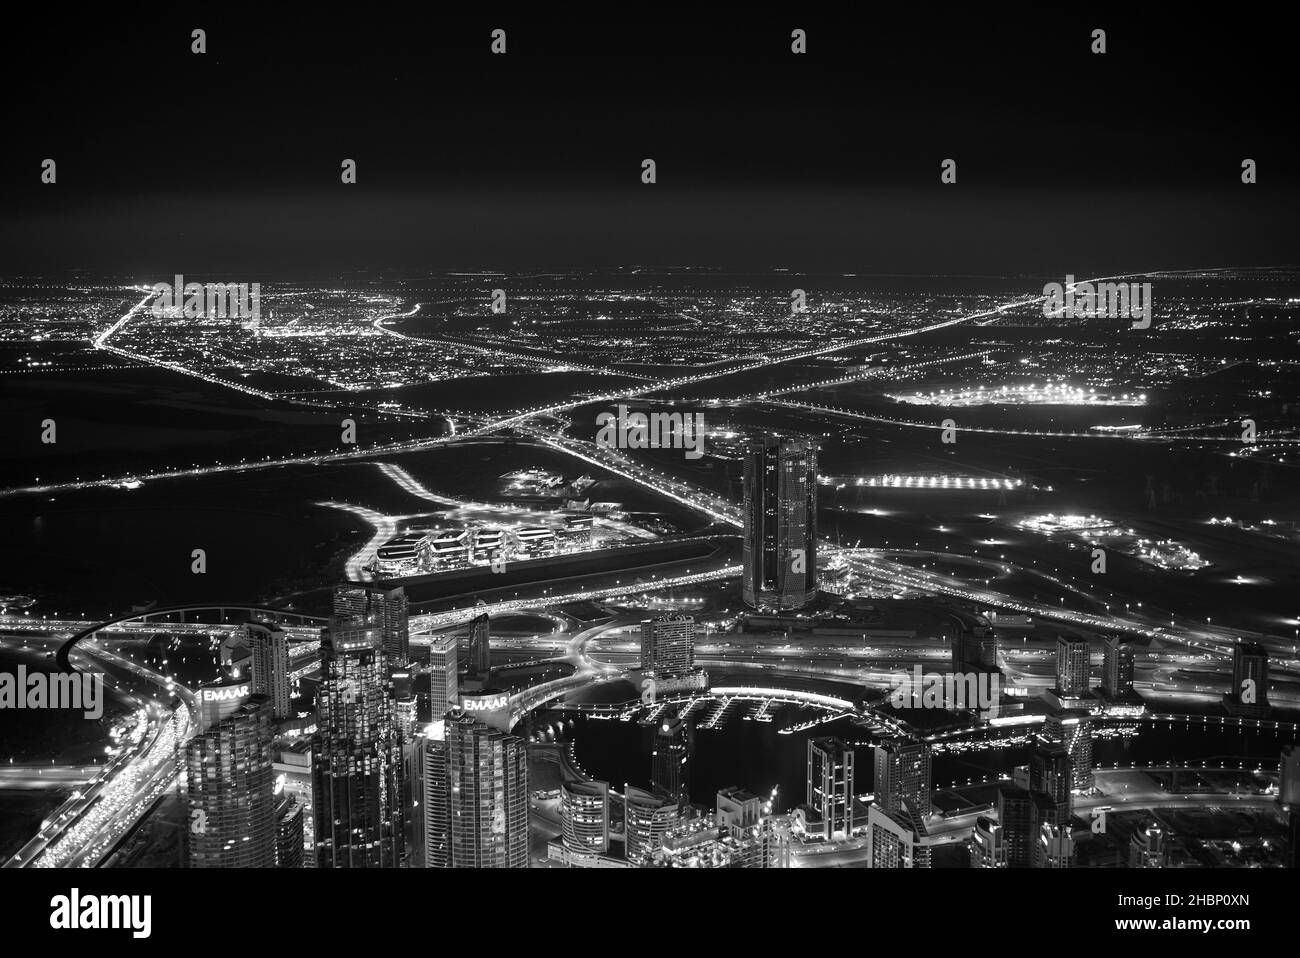 DUBAI VAE - 18. DEZEMBER 2017: Die Stadt Dubai bei Nacht, Blick vom Burj Khalifa, im obersten Stockwerk Stockfoto